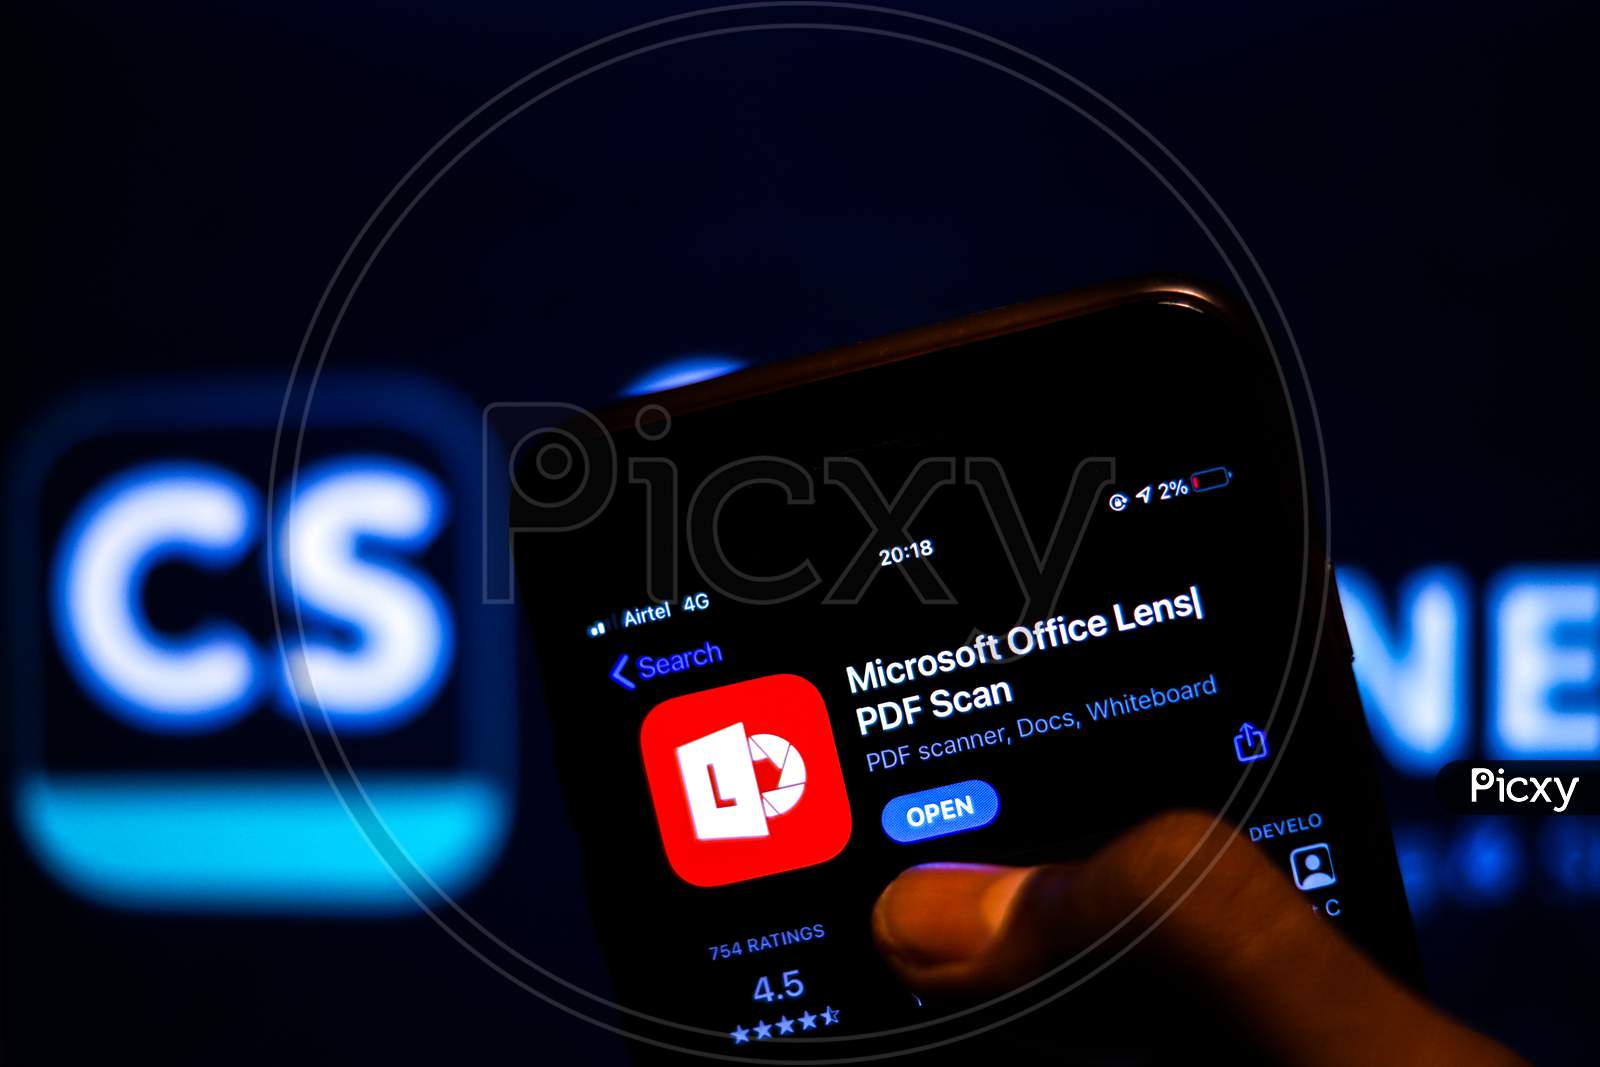 download office lens app